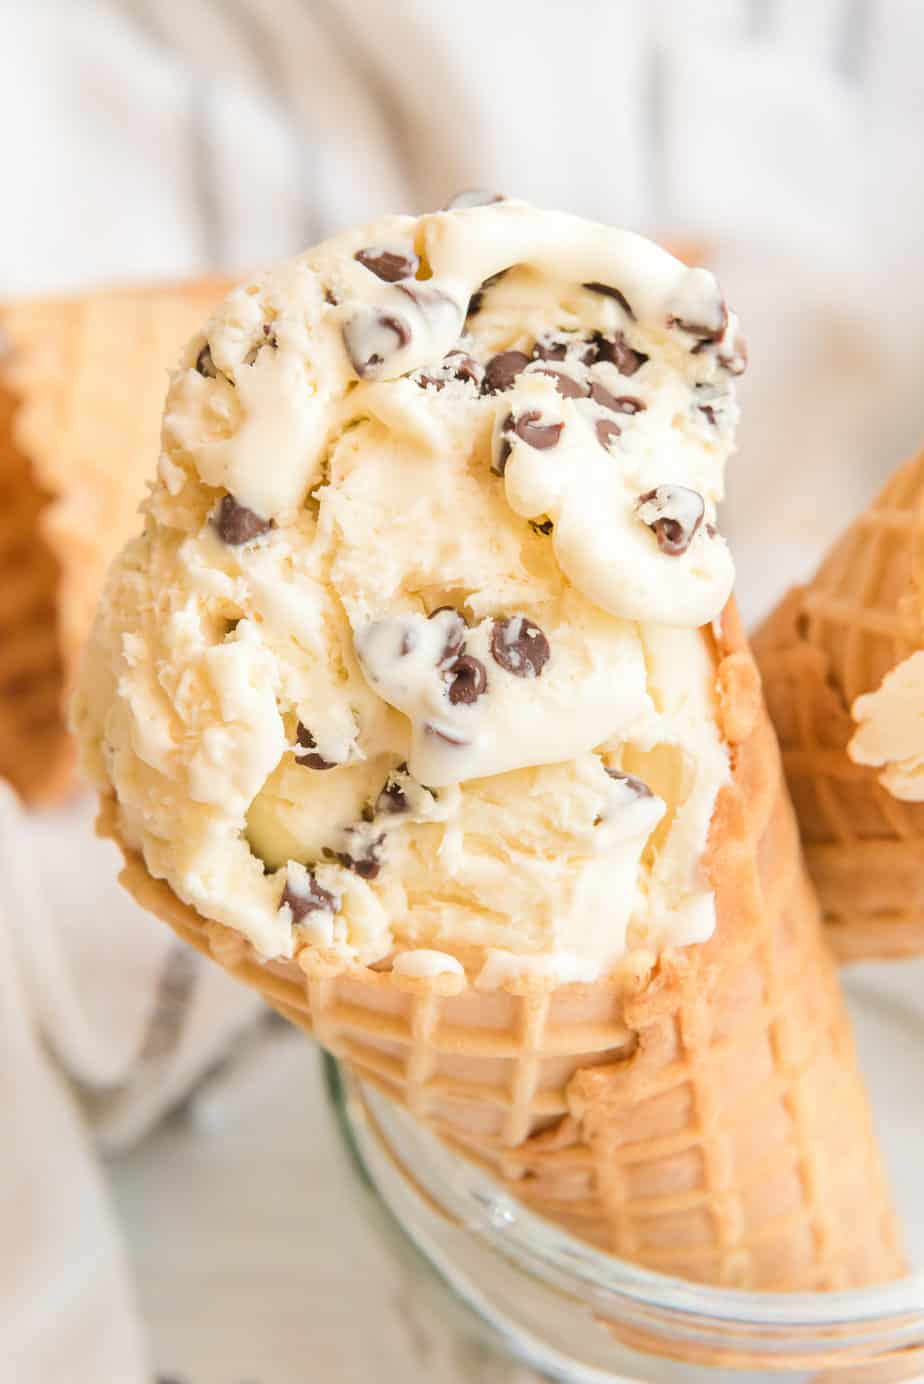 Chocolate chip ice cream in a cone close up.